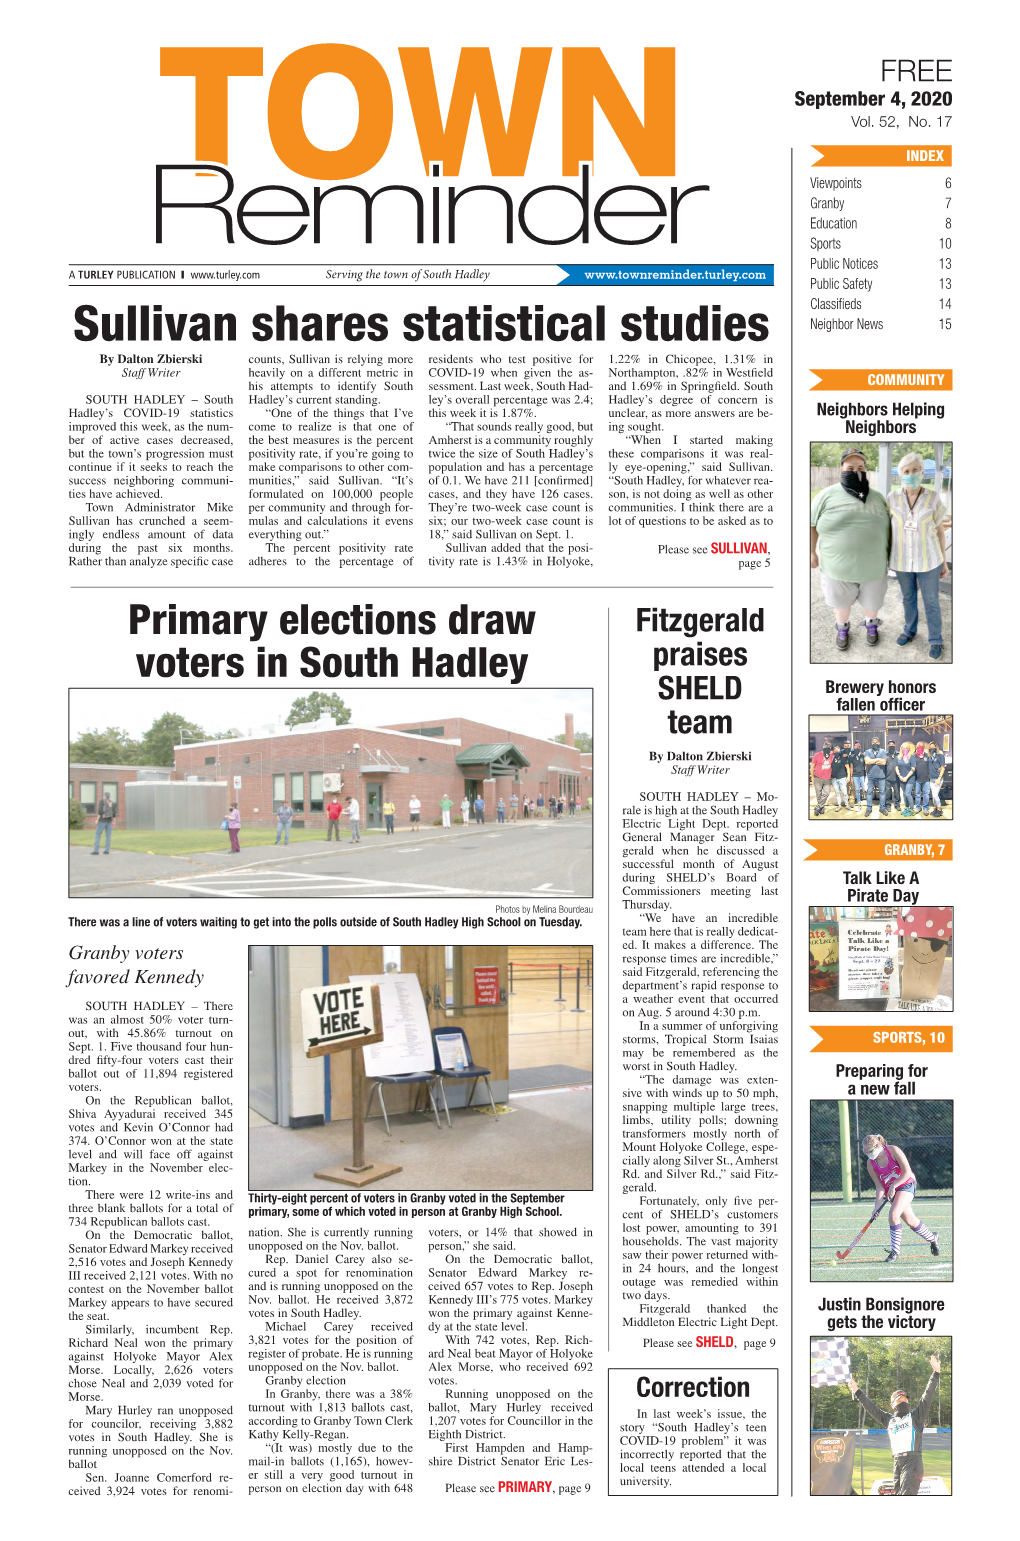 Sullivan Shares Statistical Studies